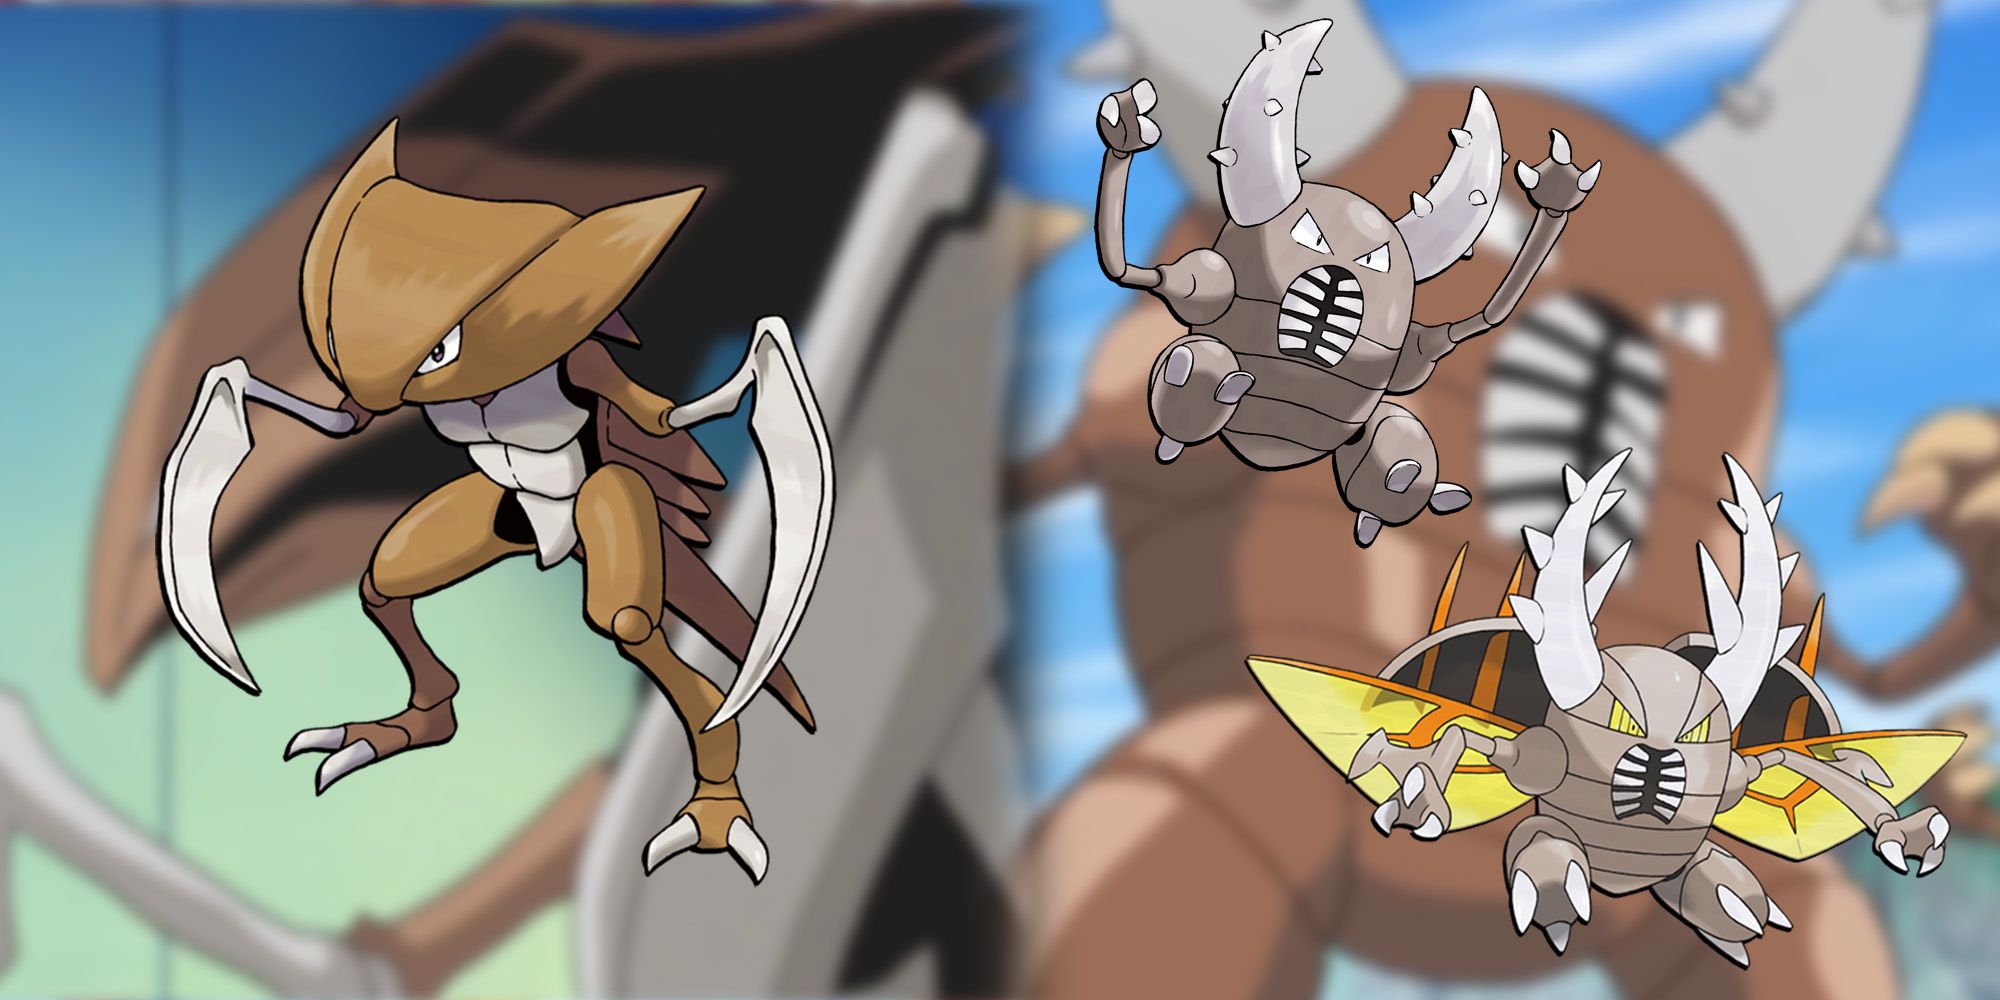 Pokemon - Kabutops and Pinsir PNGS over image of same Pokemon in Pokemon anime